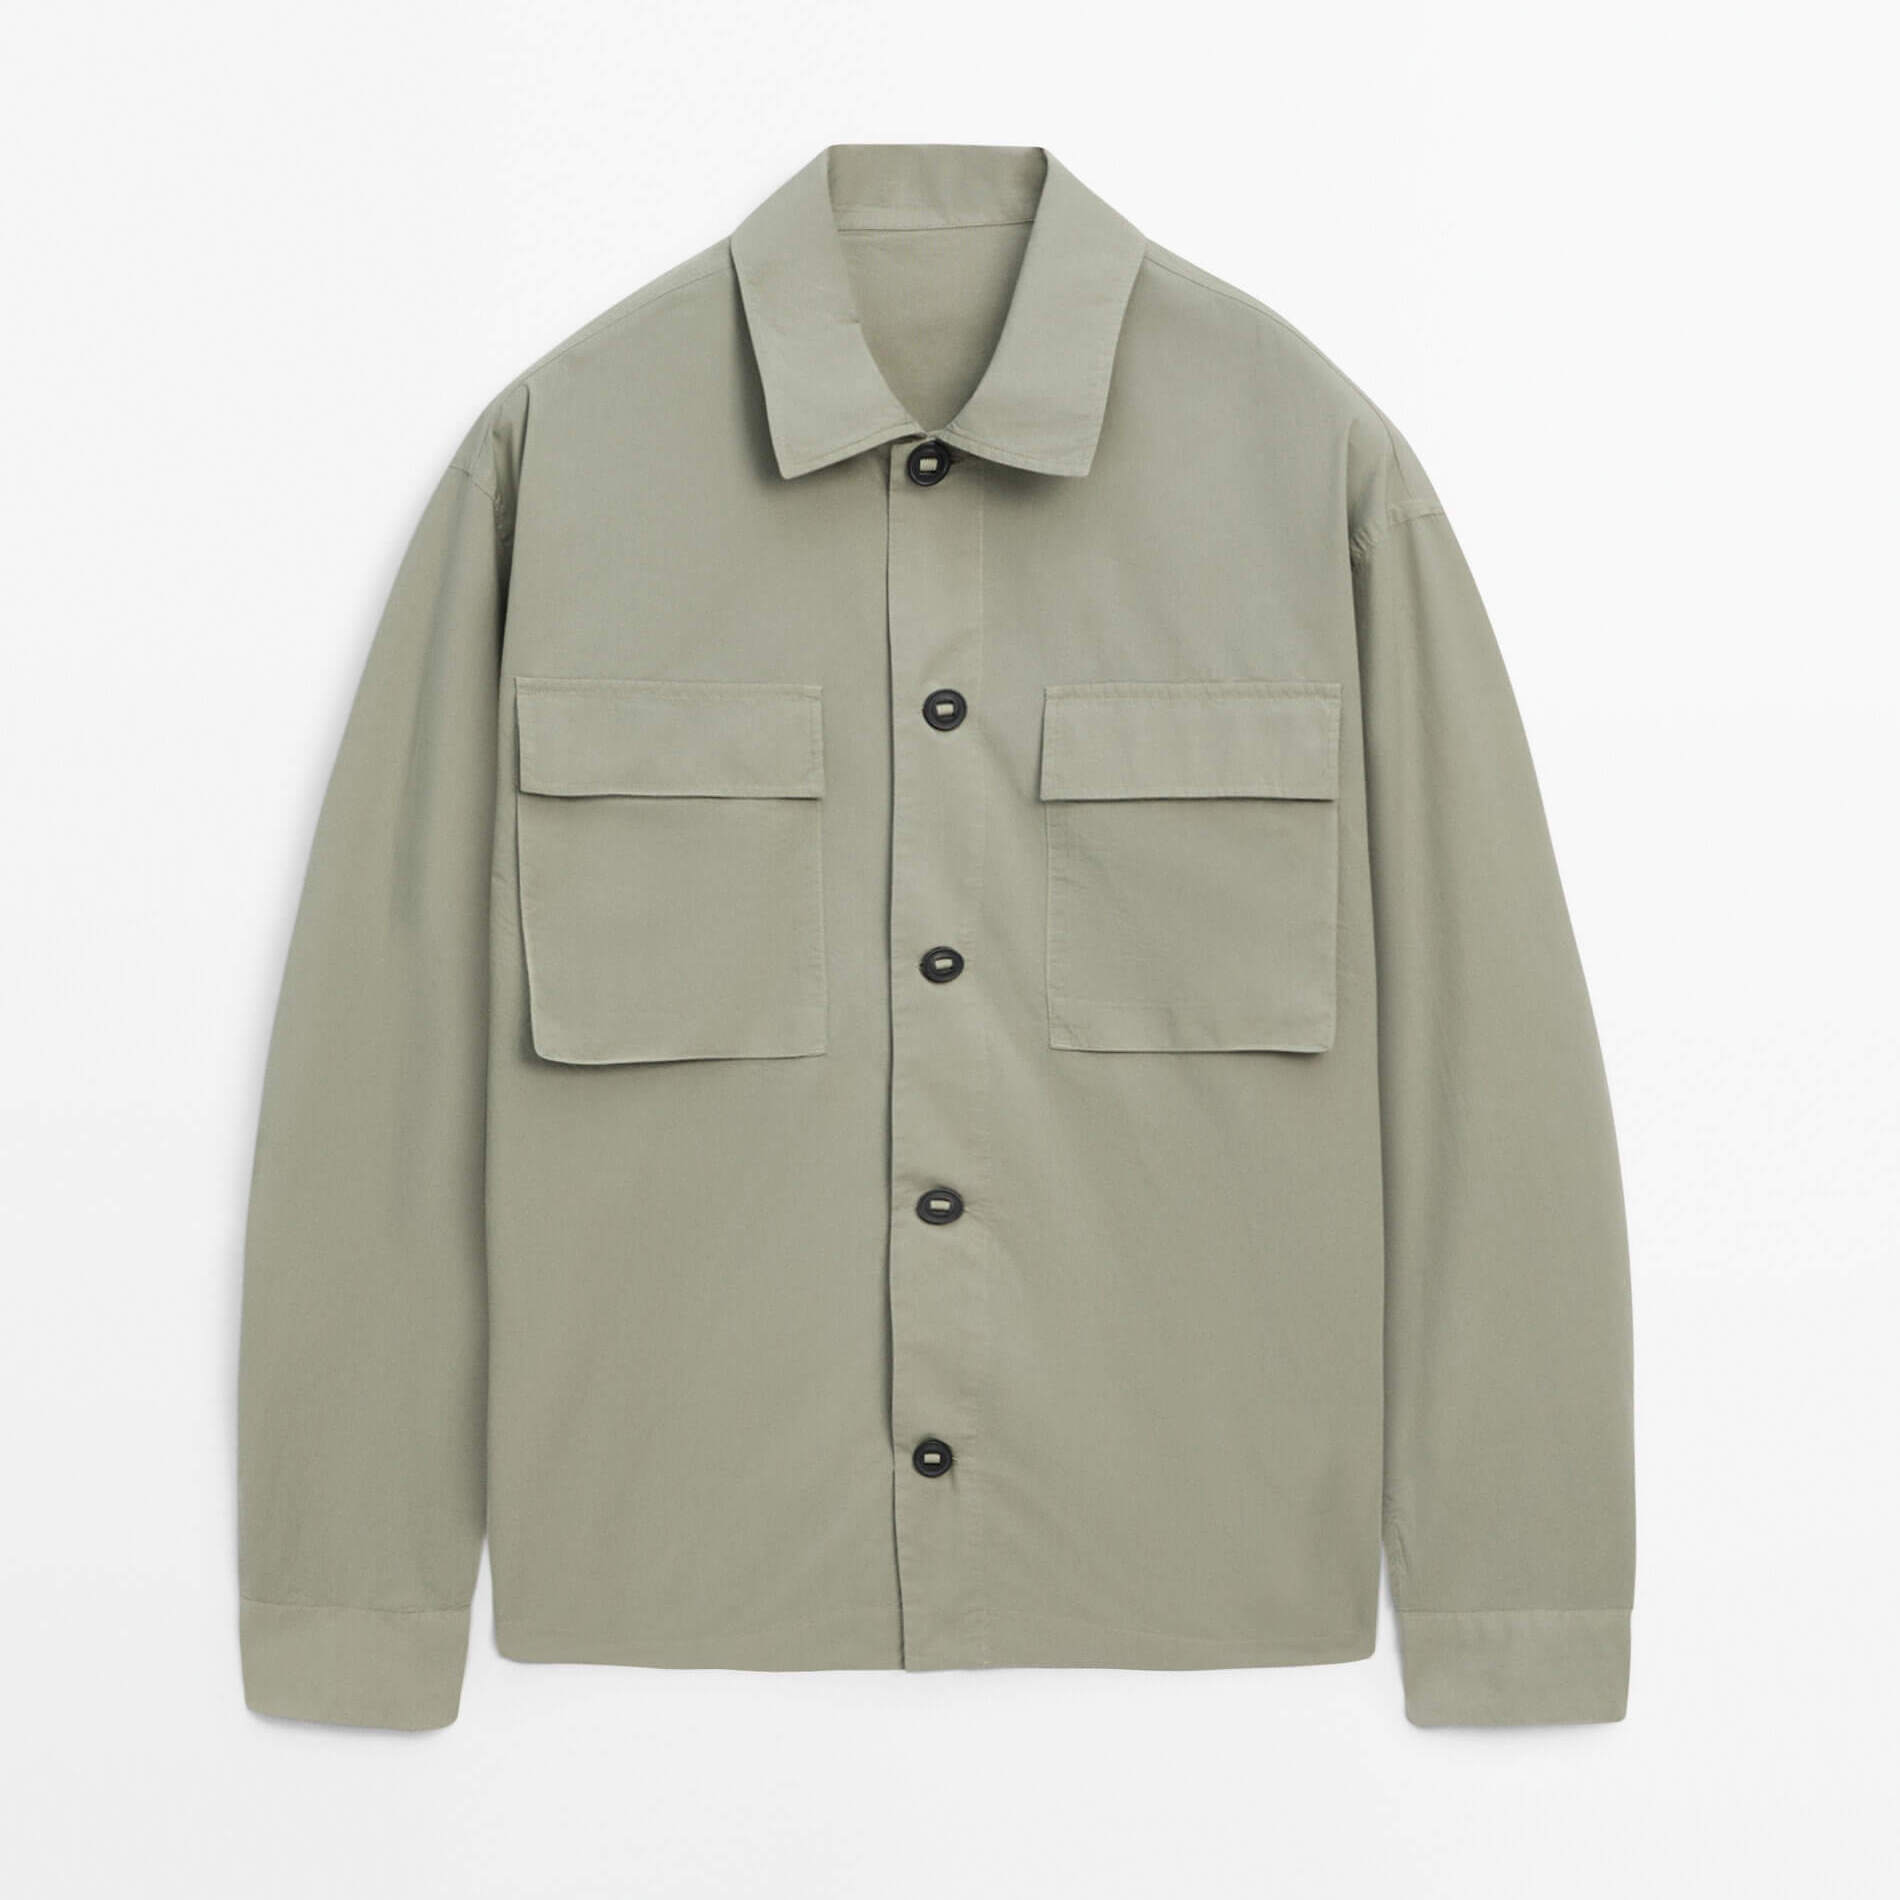 Куртка-рубашка Massimo Dutti Cotton With Chest Pockets, светло-зеленый куртка рубашка massimo dutti 100% cotton with pockets темный хаки